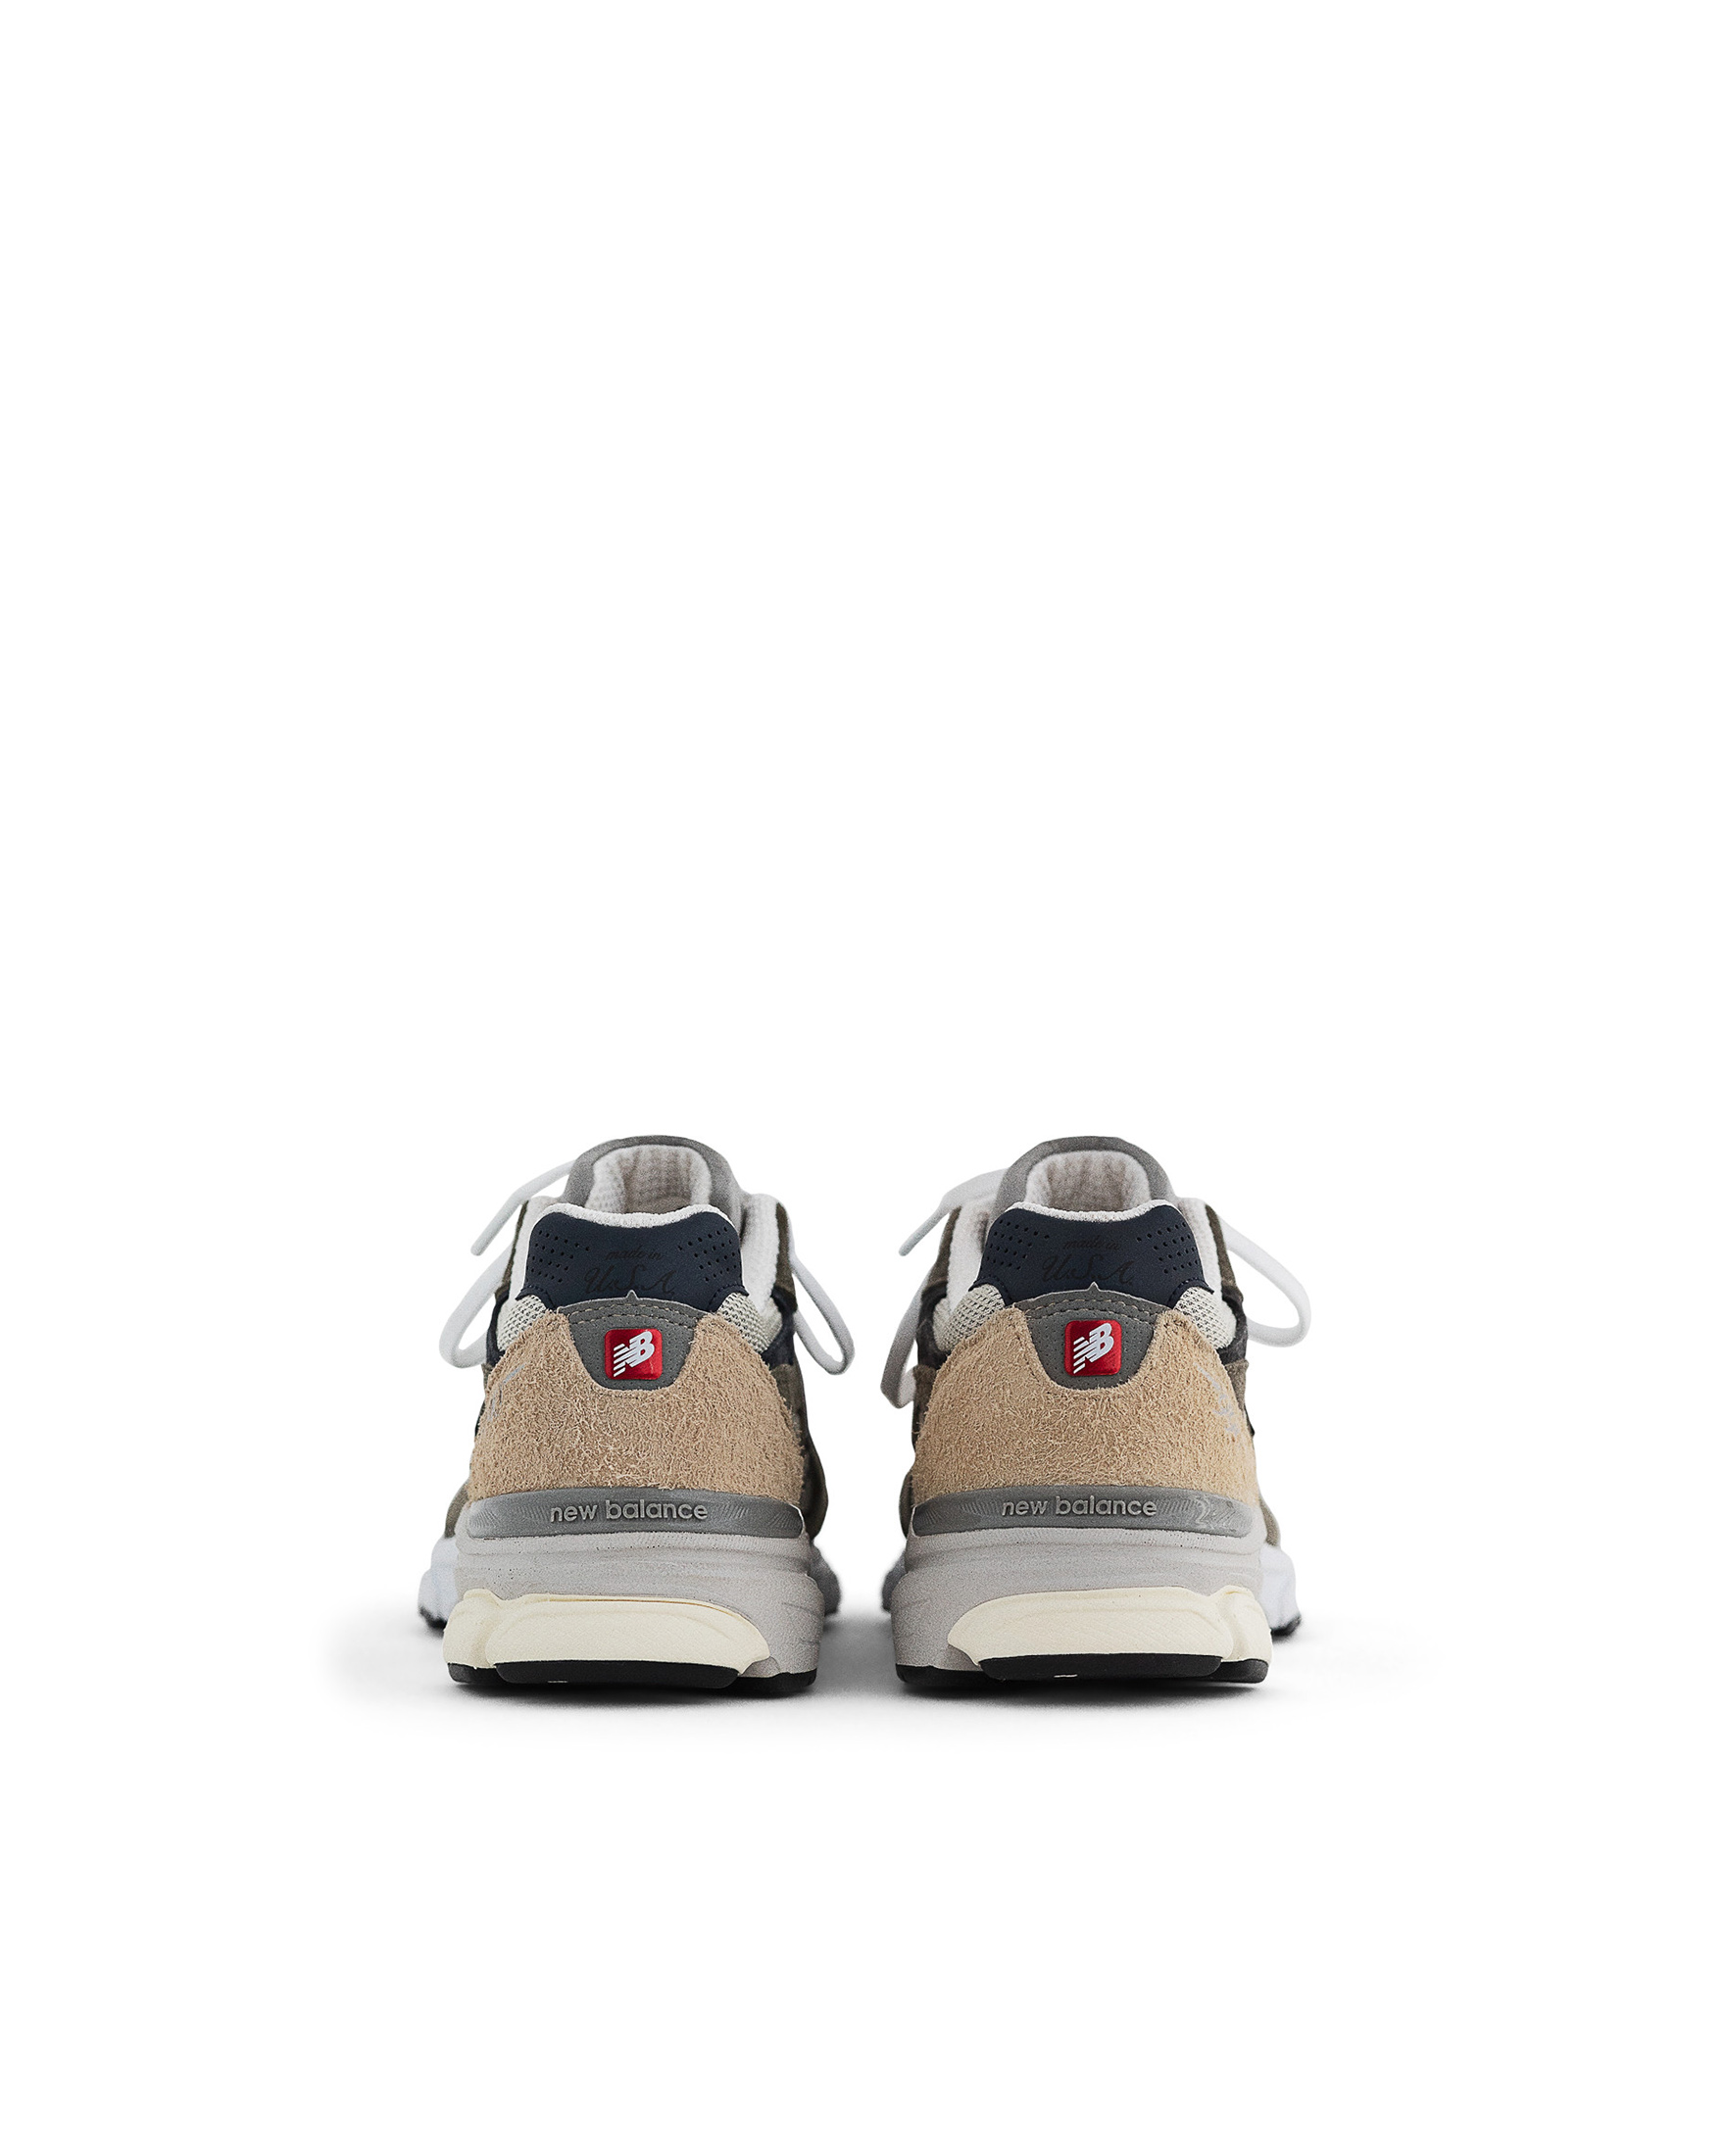 M990TO3 New Balance Footwear Sneakers Grey